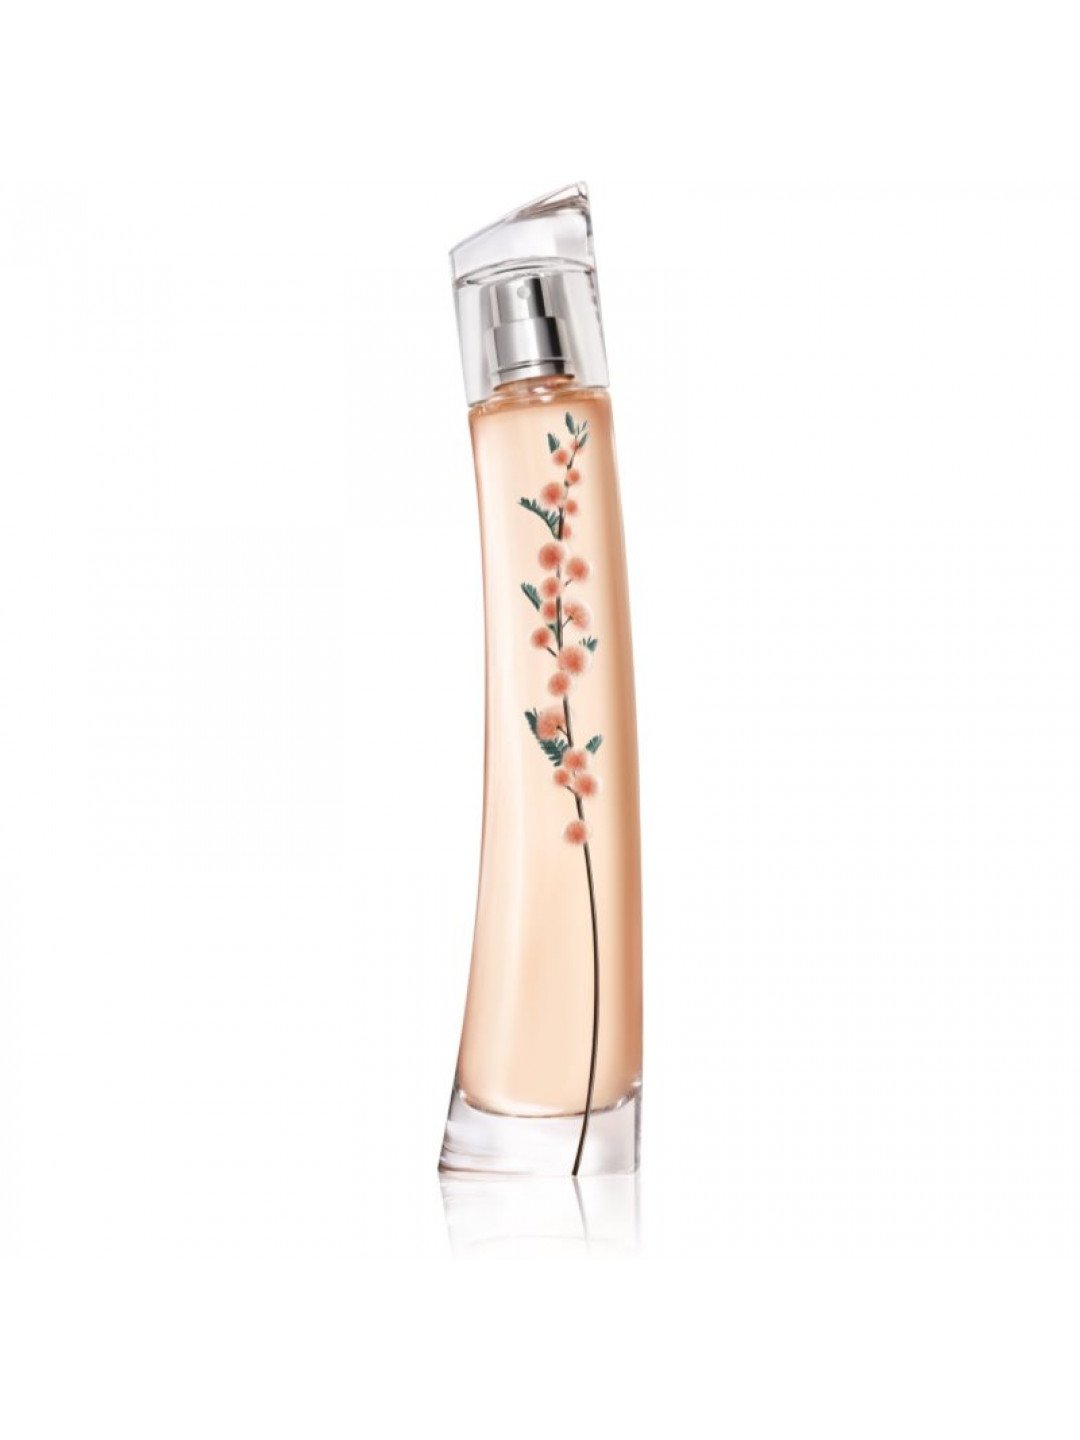 KENZO Flower by Kenzo Ikebana Mimosa parfémovaná voda pro ženy 40 ml